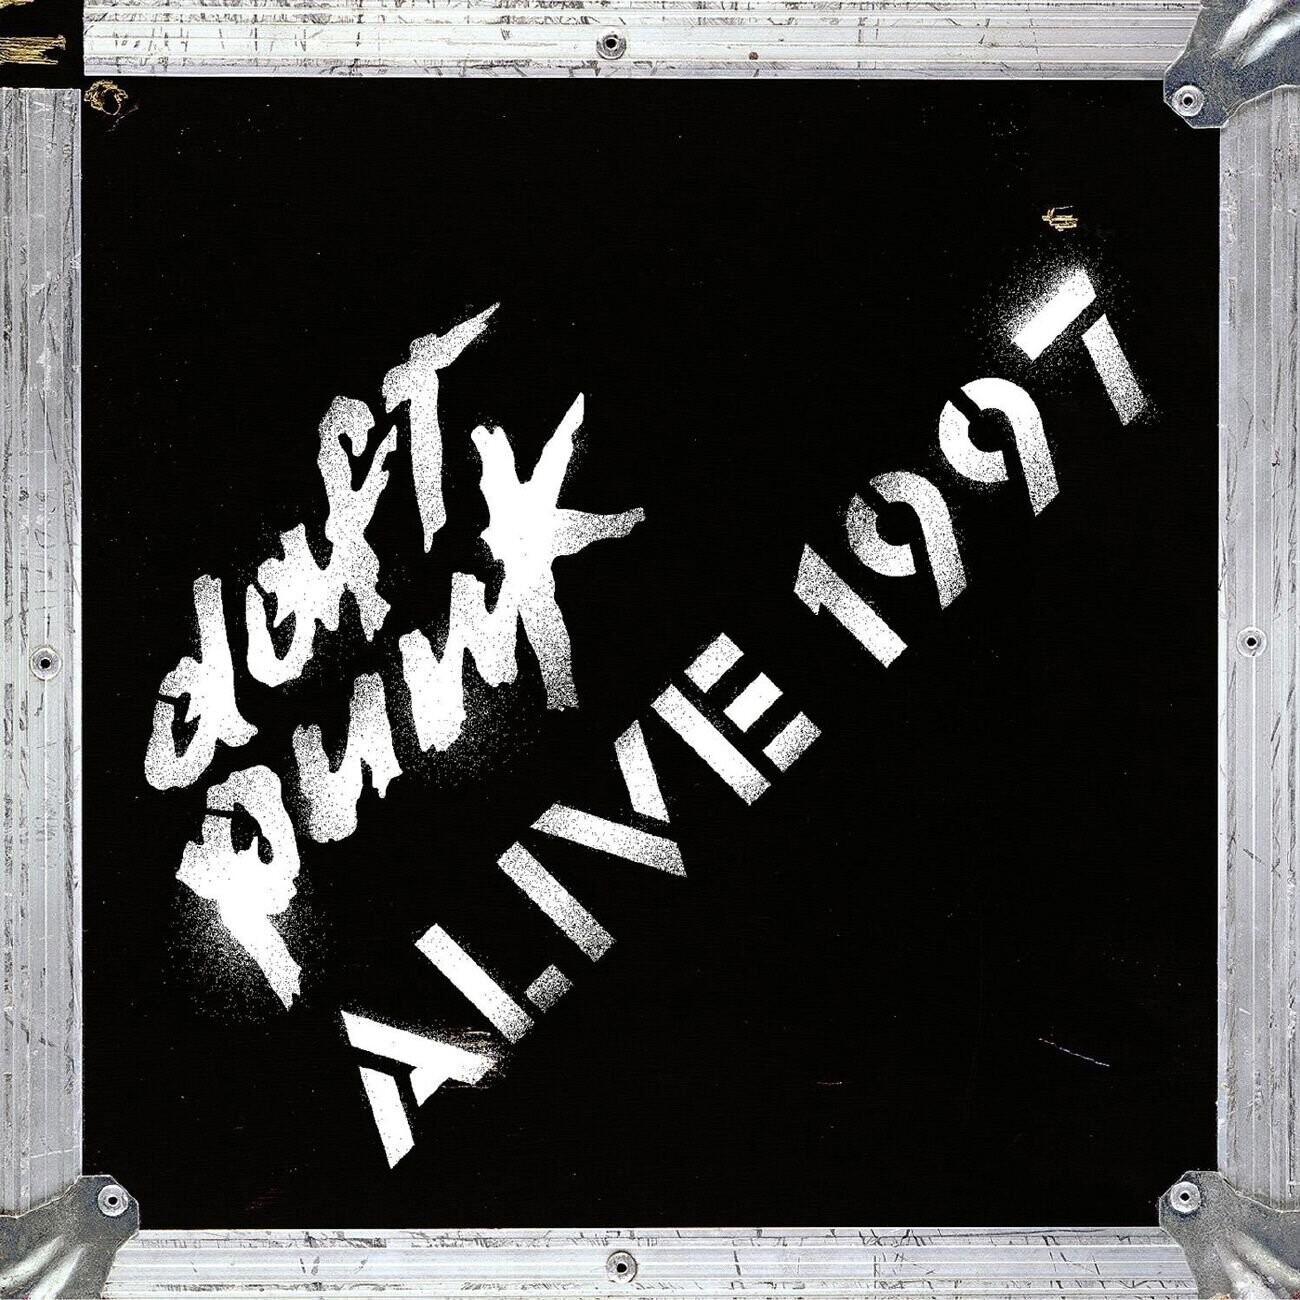 Daft Punk / Alive 1997